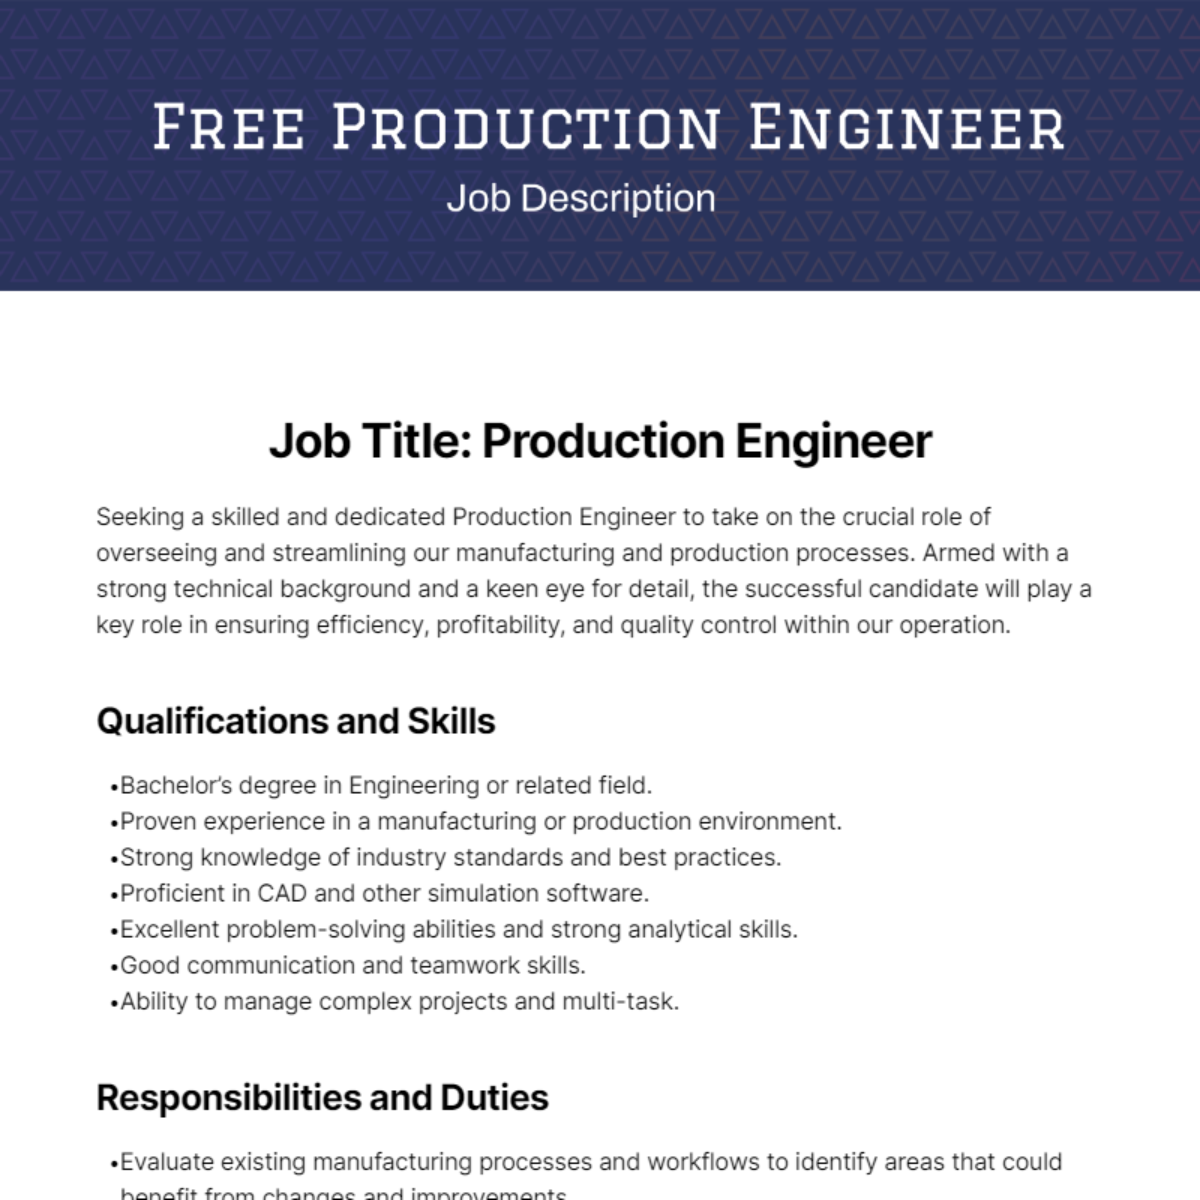 Free Production Engineer Job Description Template